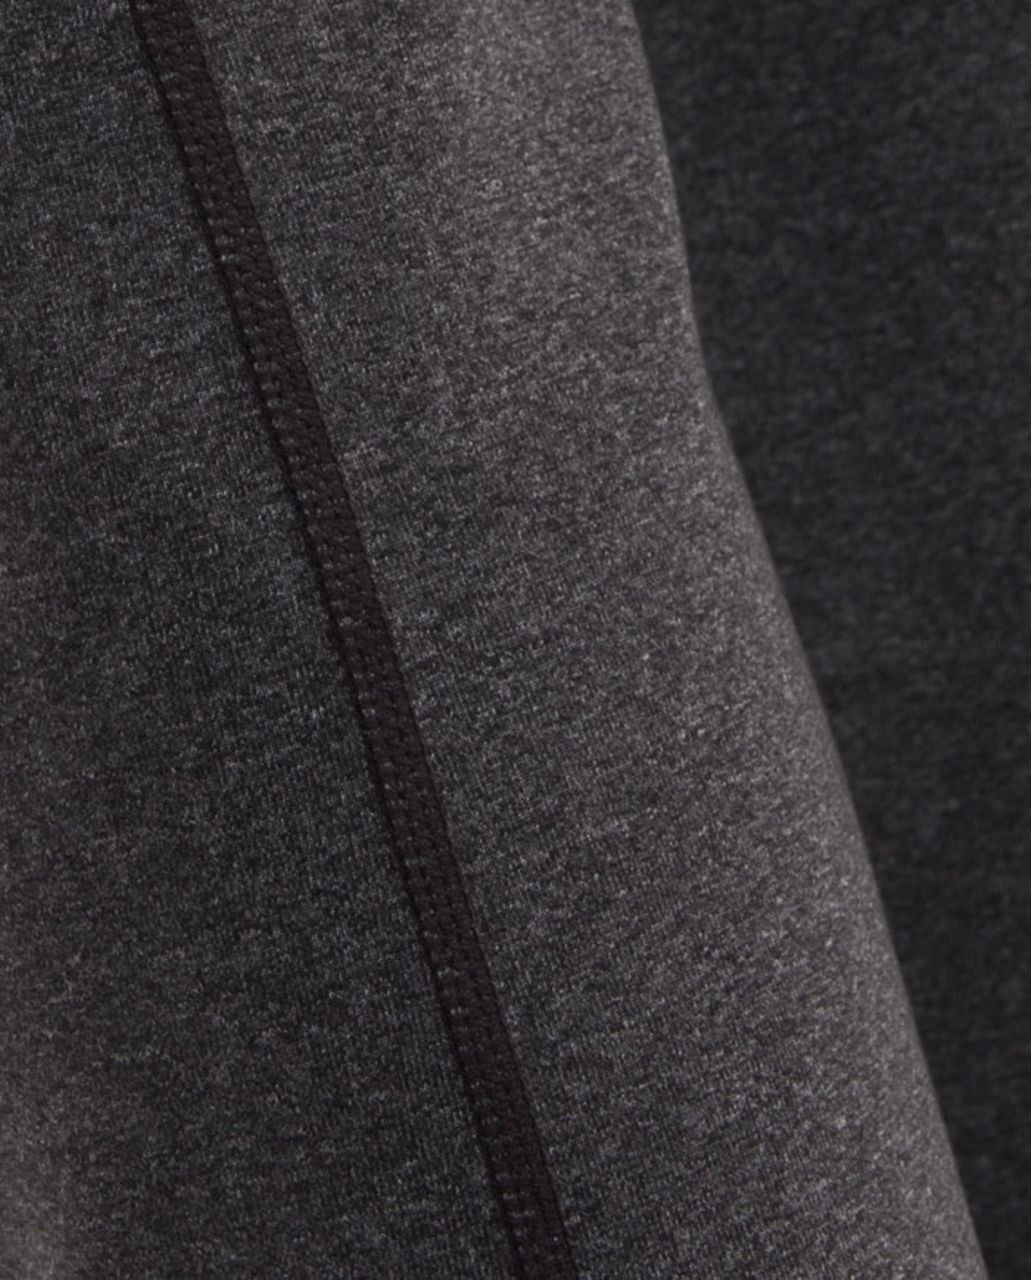 Lululemon Groove Pant (Regular) - Heathered Deep Coal /  Quilting Winter 4 /  White Heathered Blurred Grey Mini Check